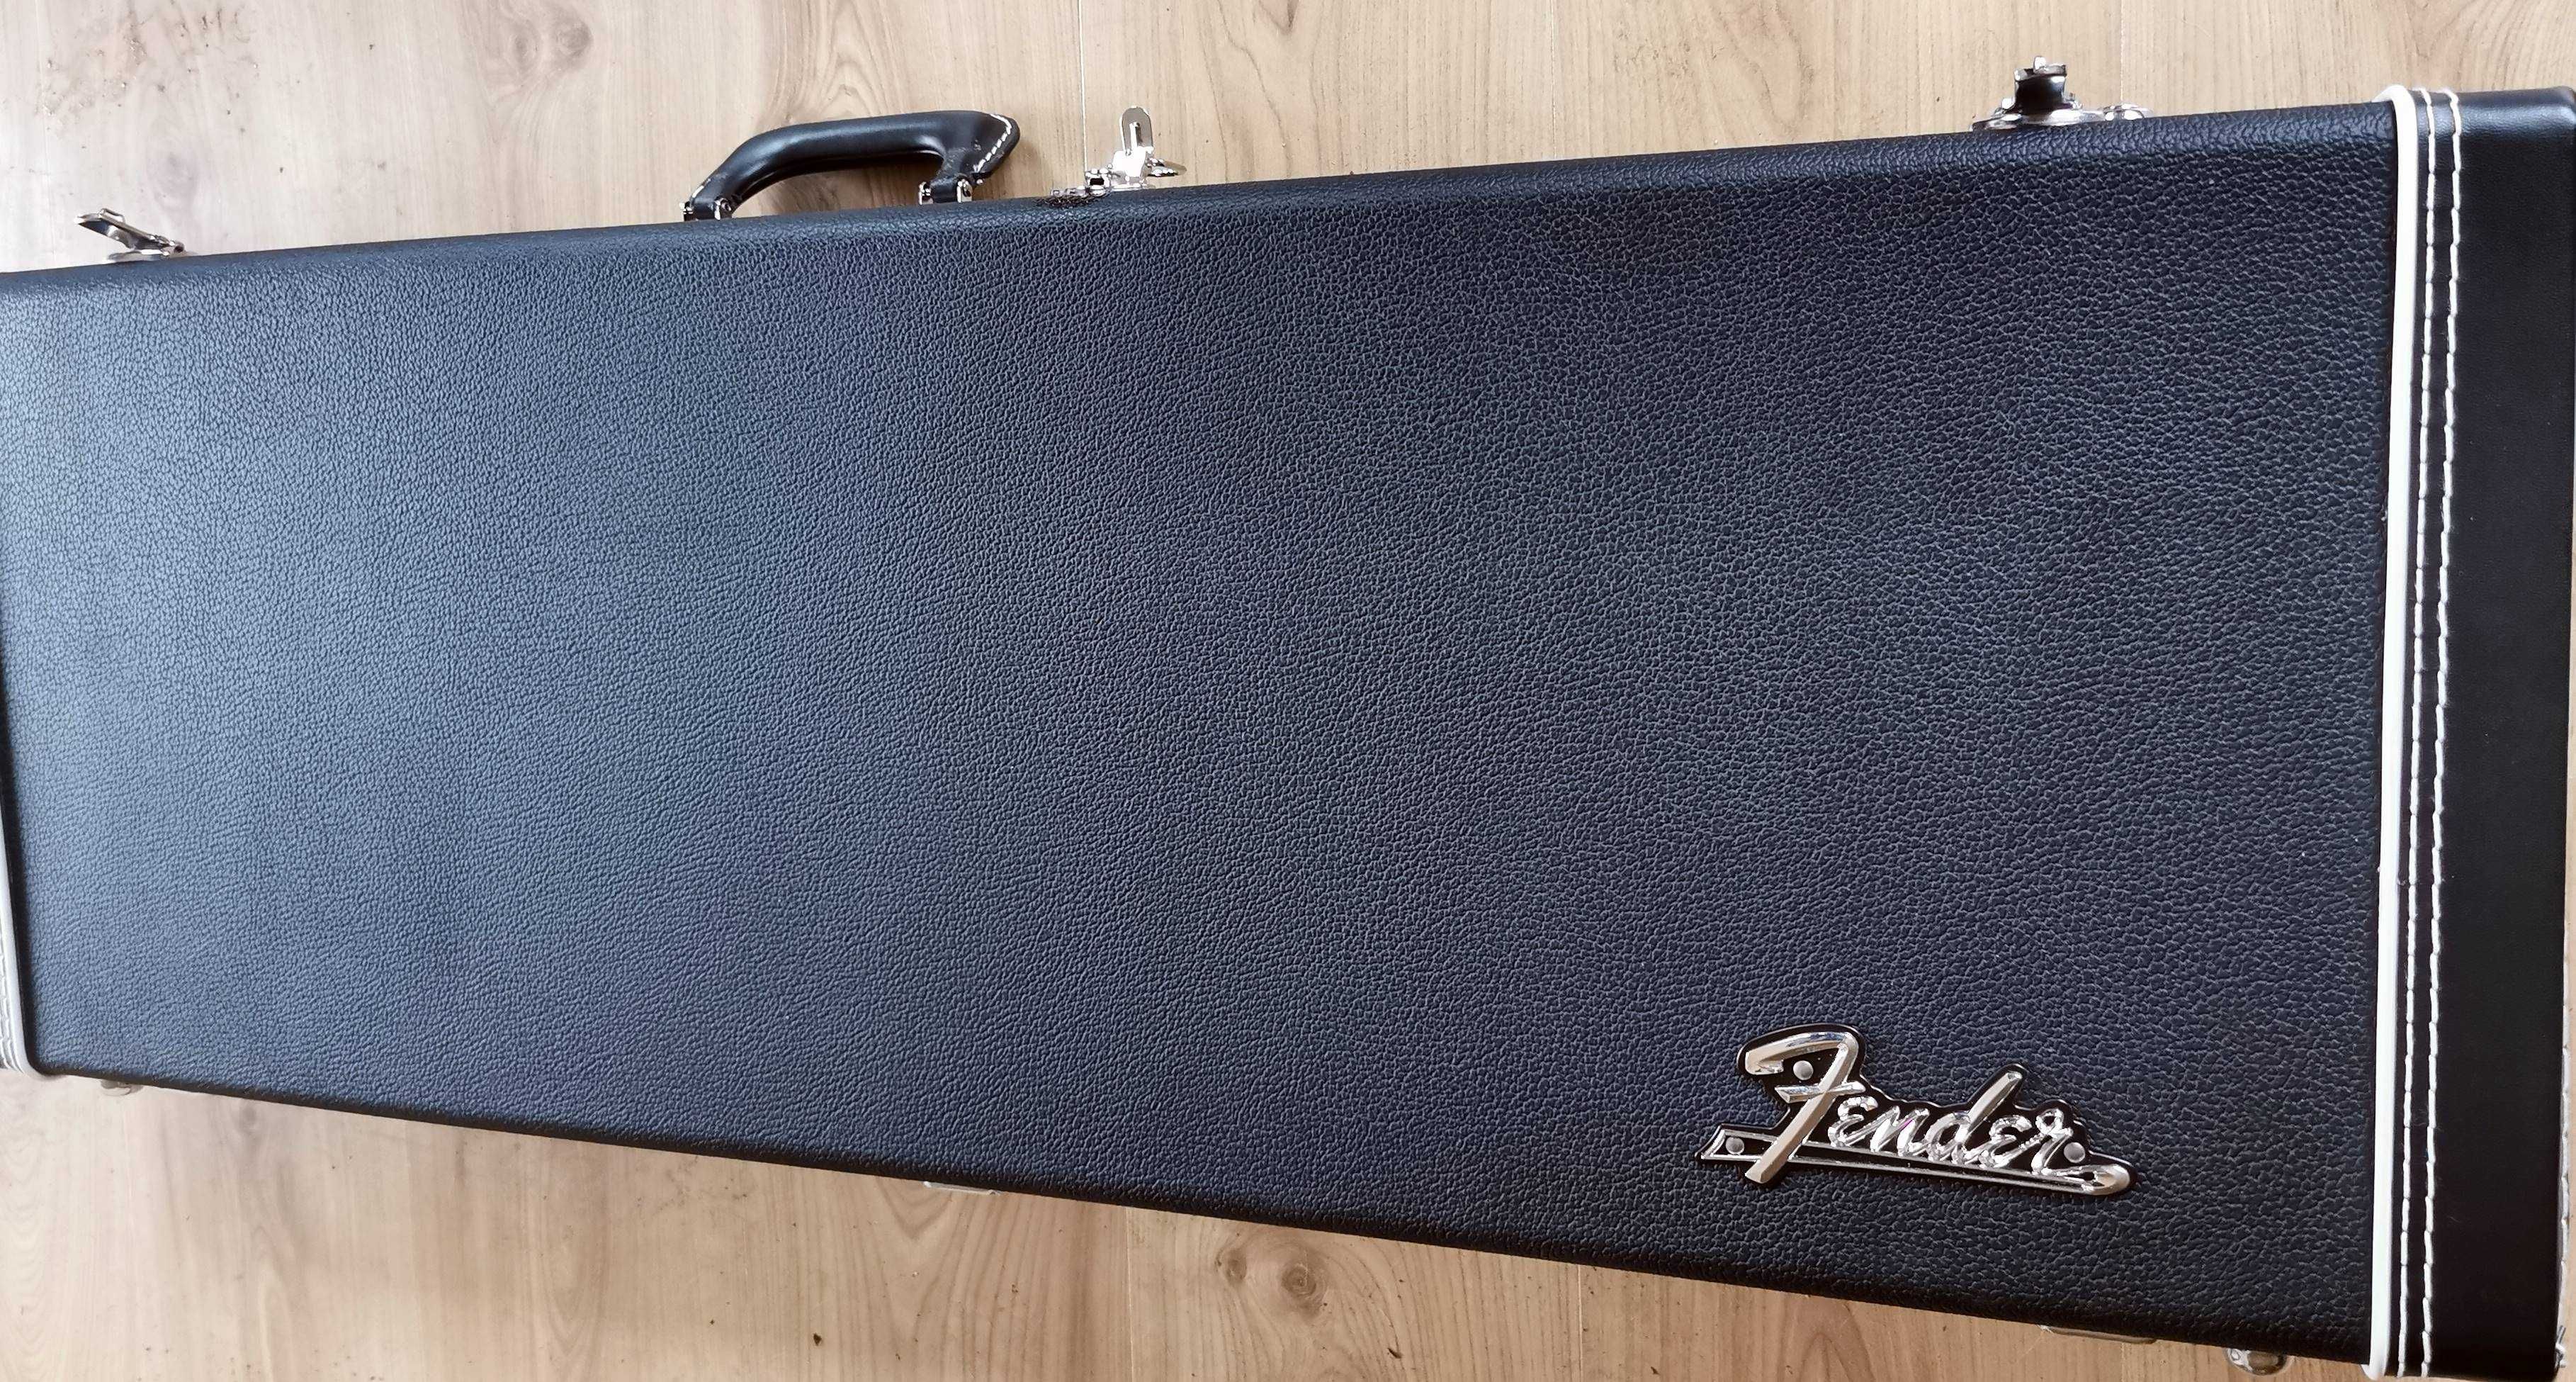 Fender Telecaster Amer stnd przetw custom shop